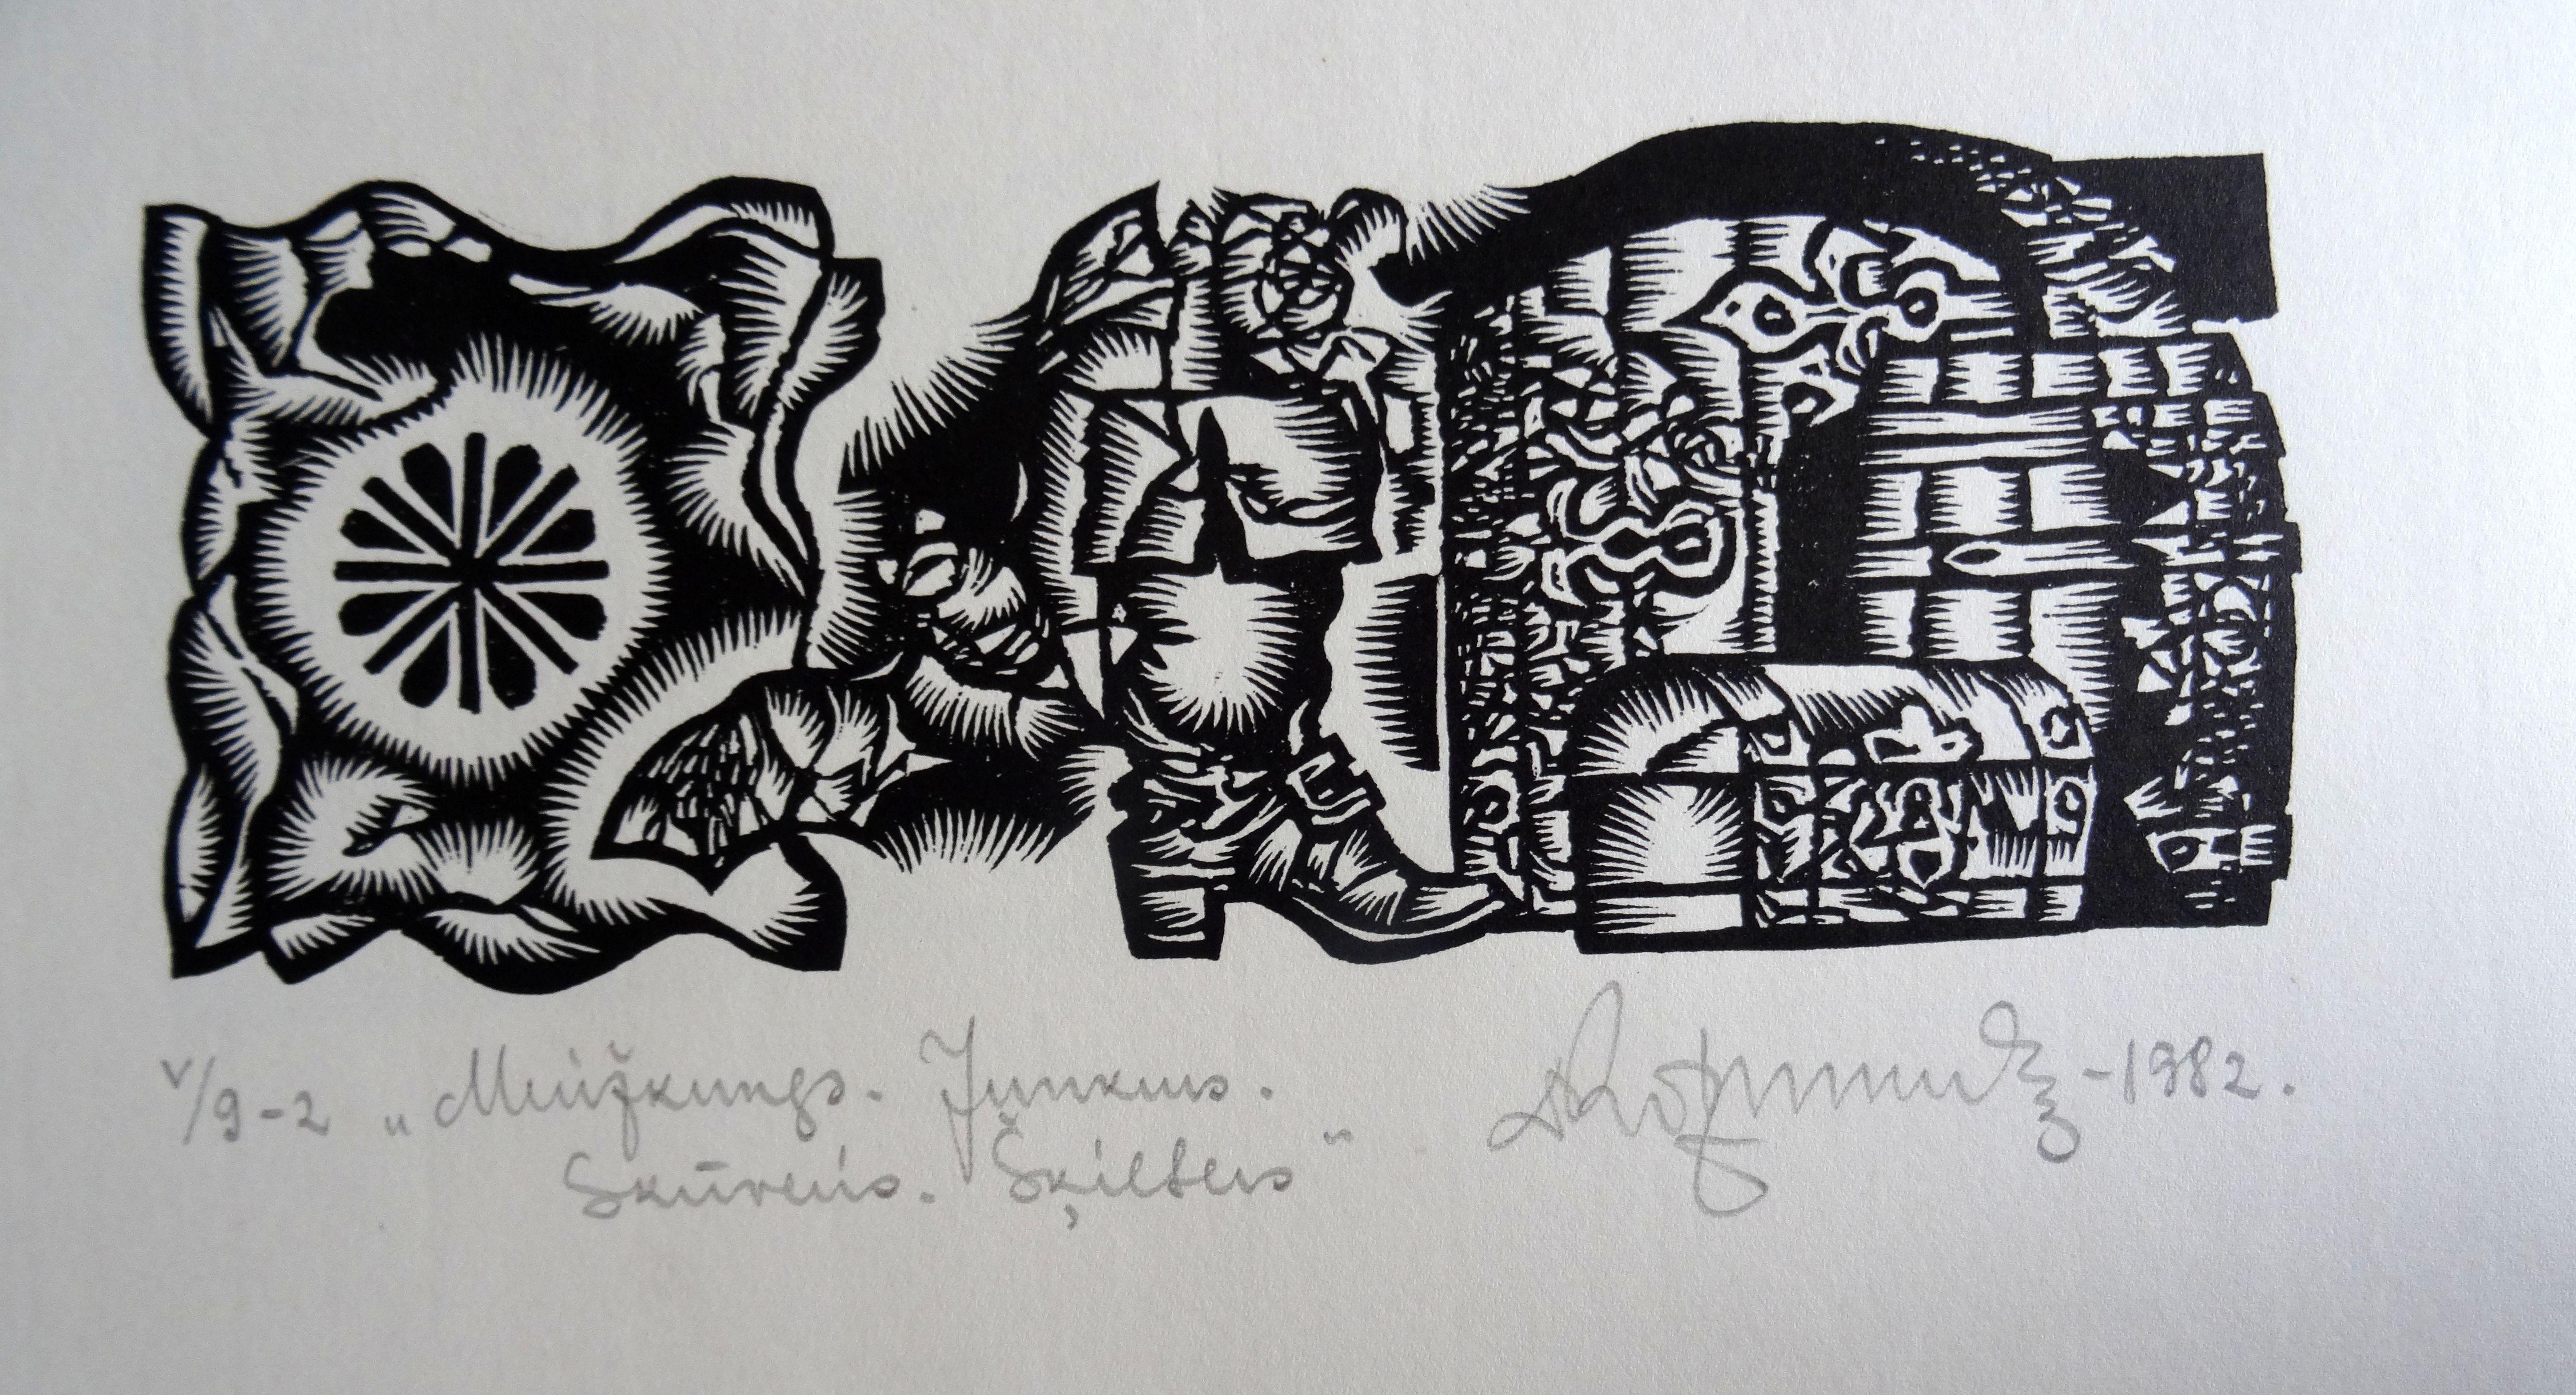 Dainis Rozkalns Print – Herr des Hauses. 1982. Papier, Linolschnitt, 20x34 cm